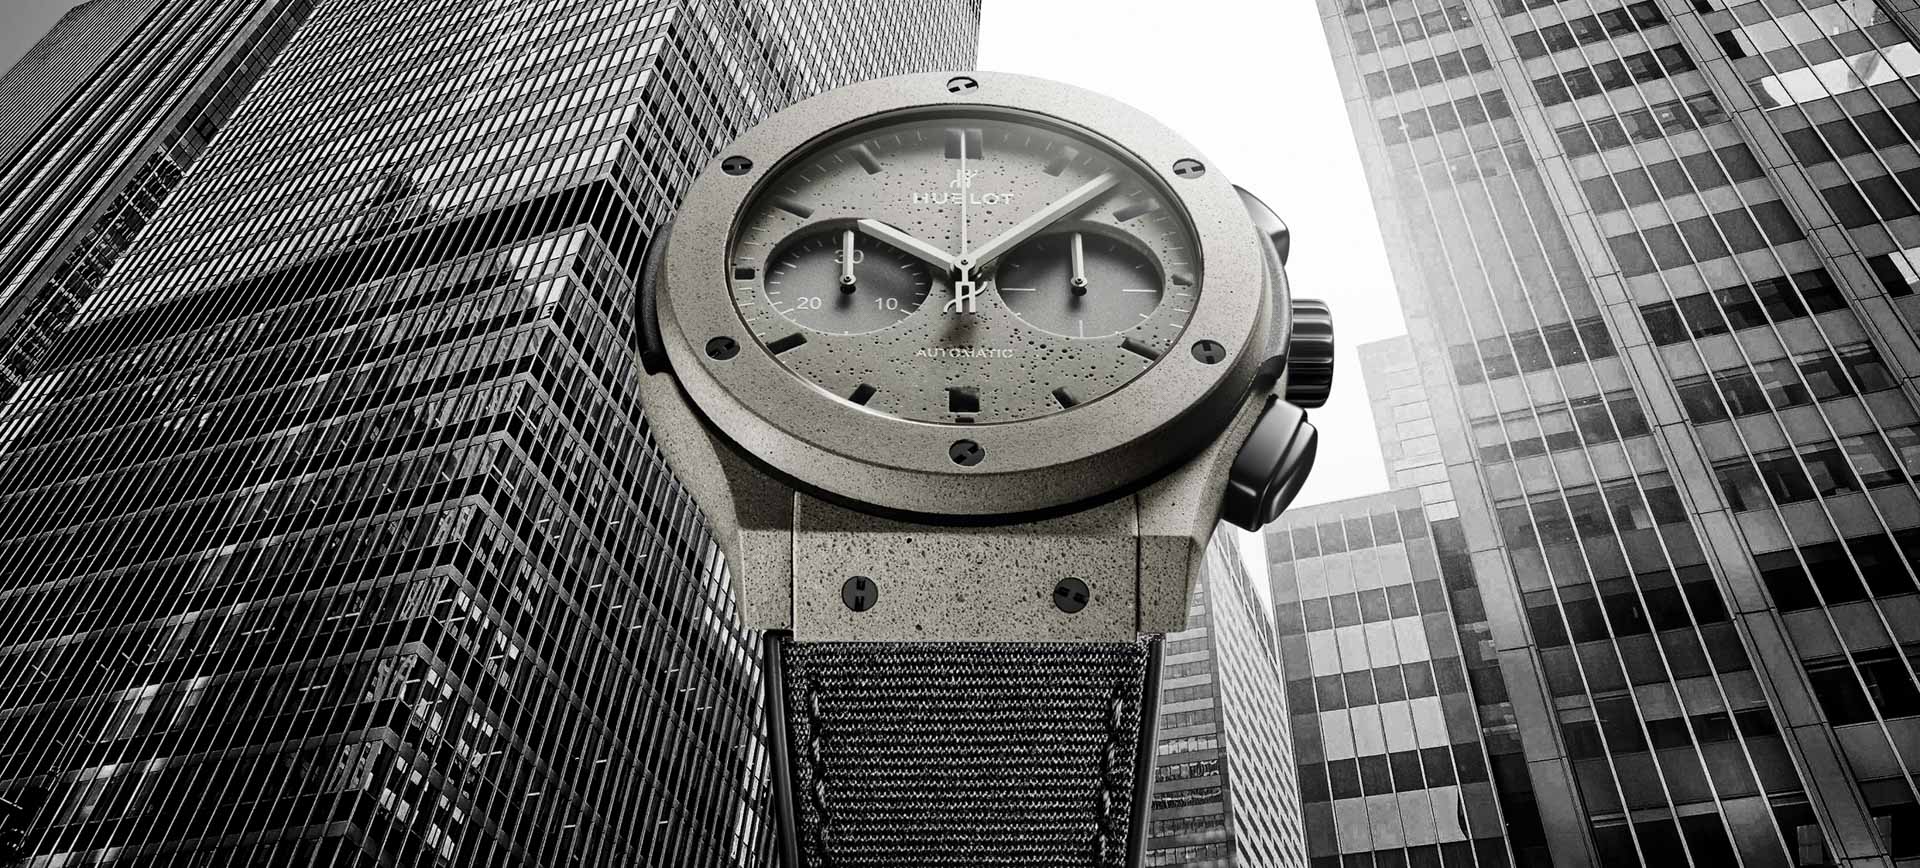 Hublot Classic Fusion Concrete Jungle New York Watch